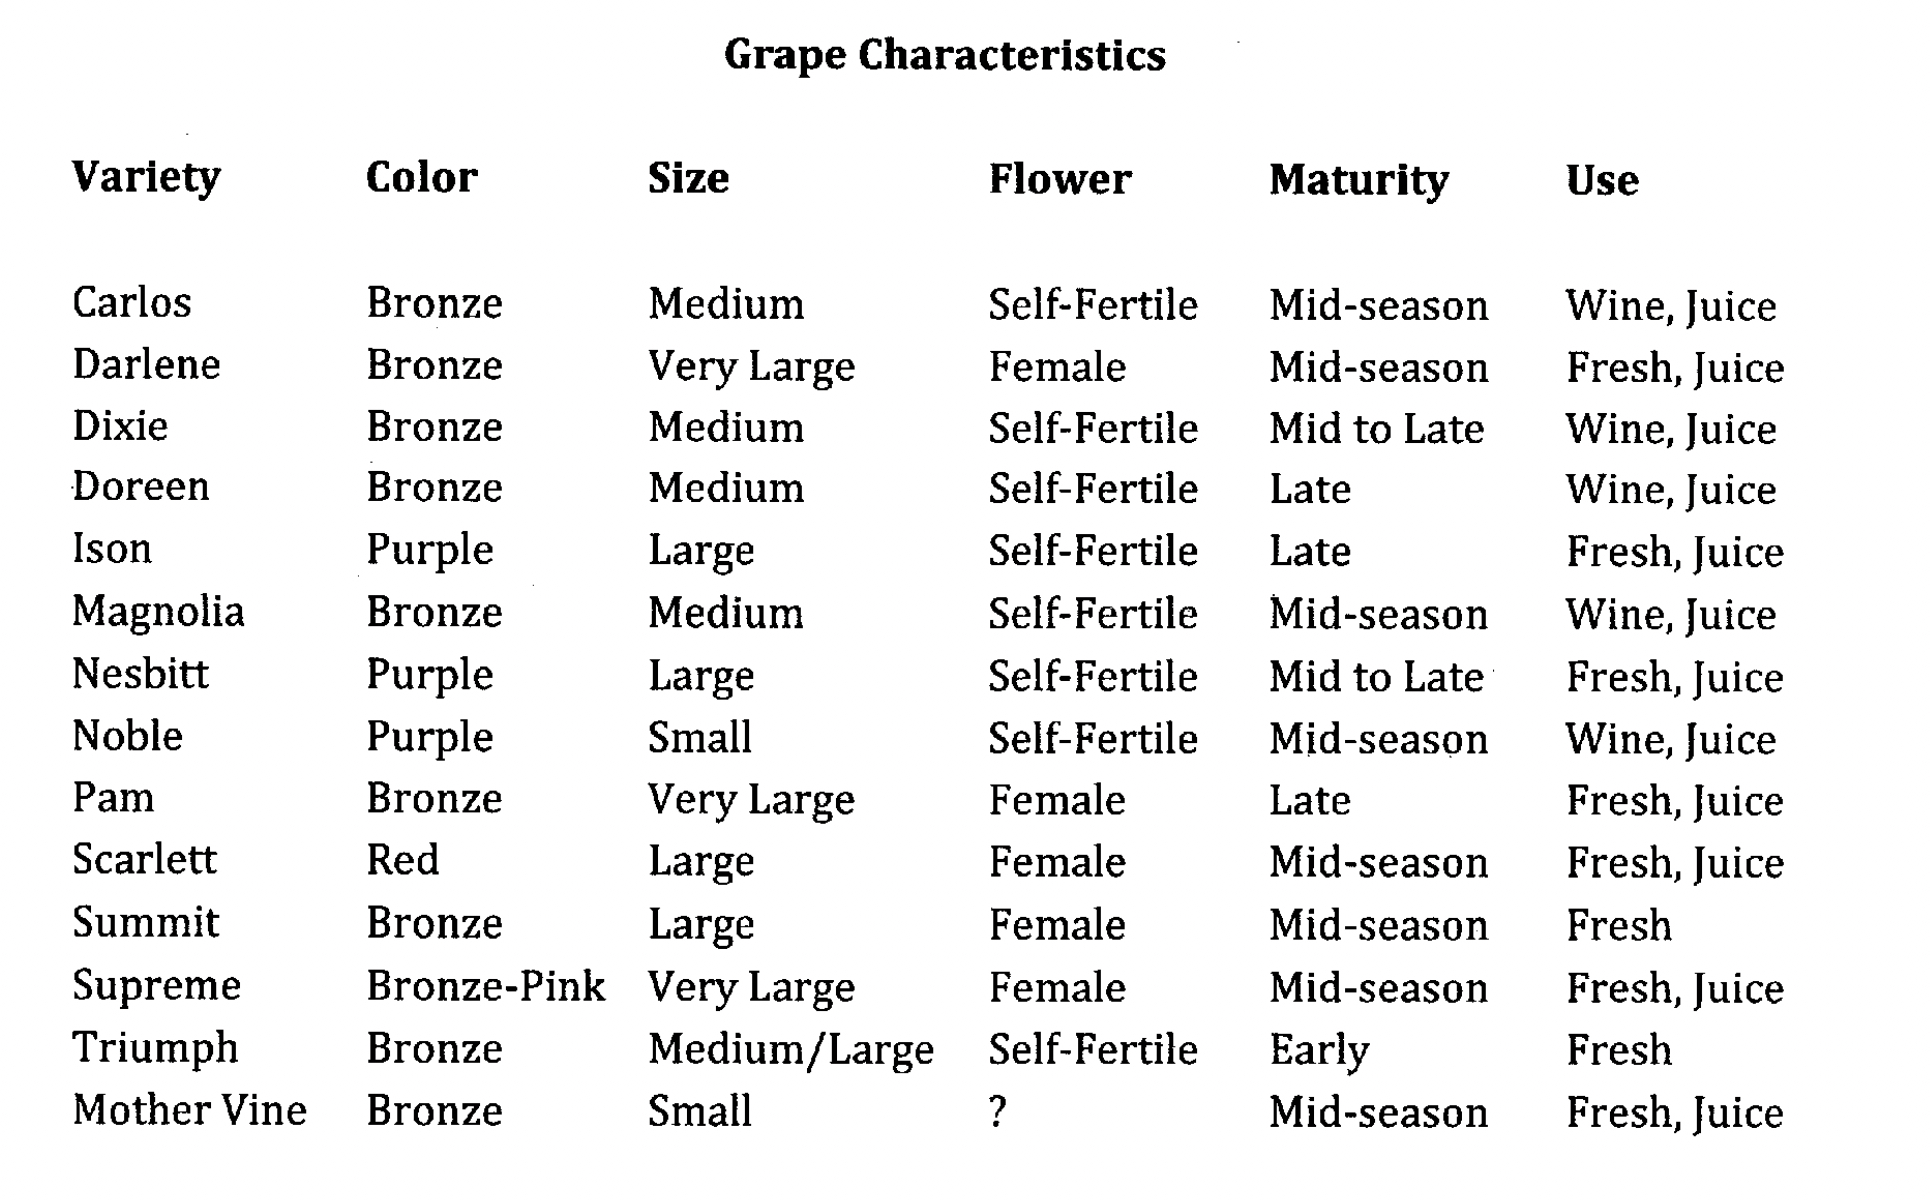 Grape varieties and characteristics